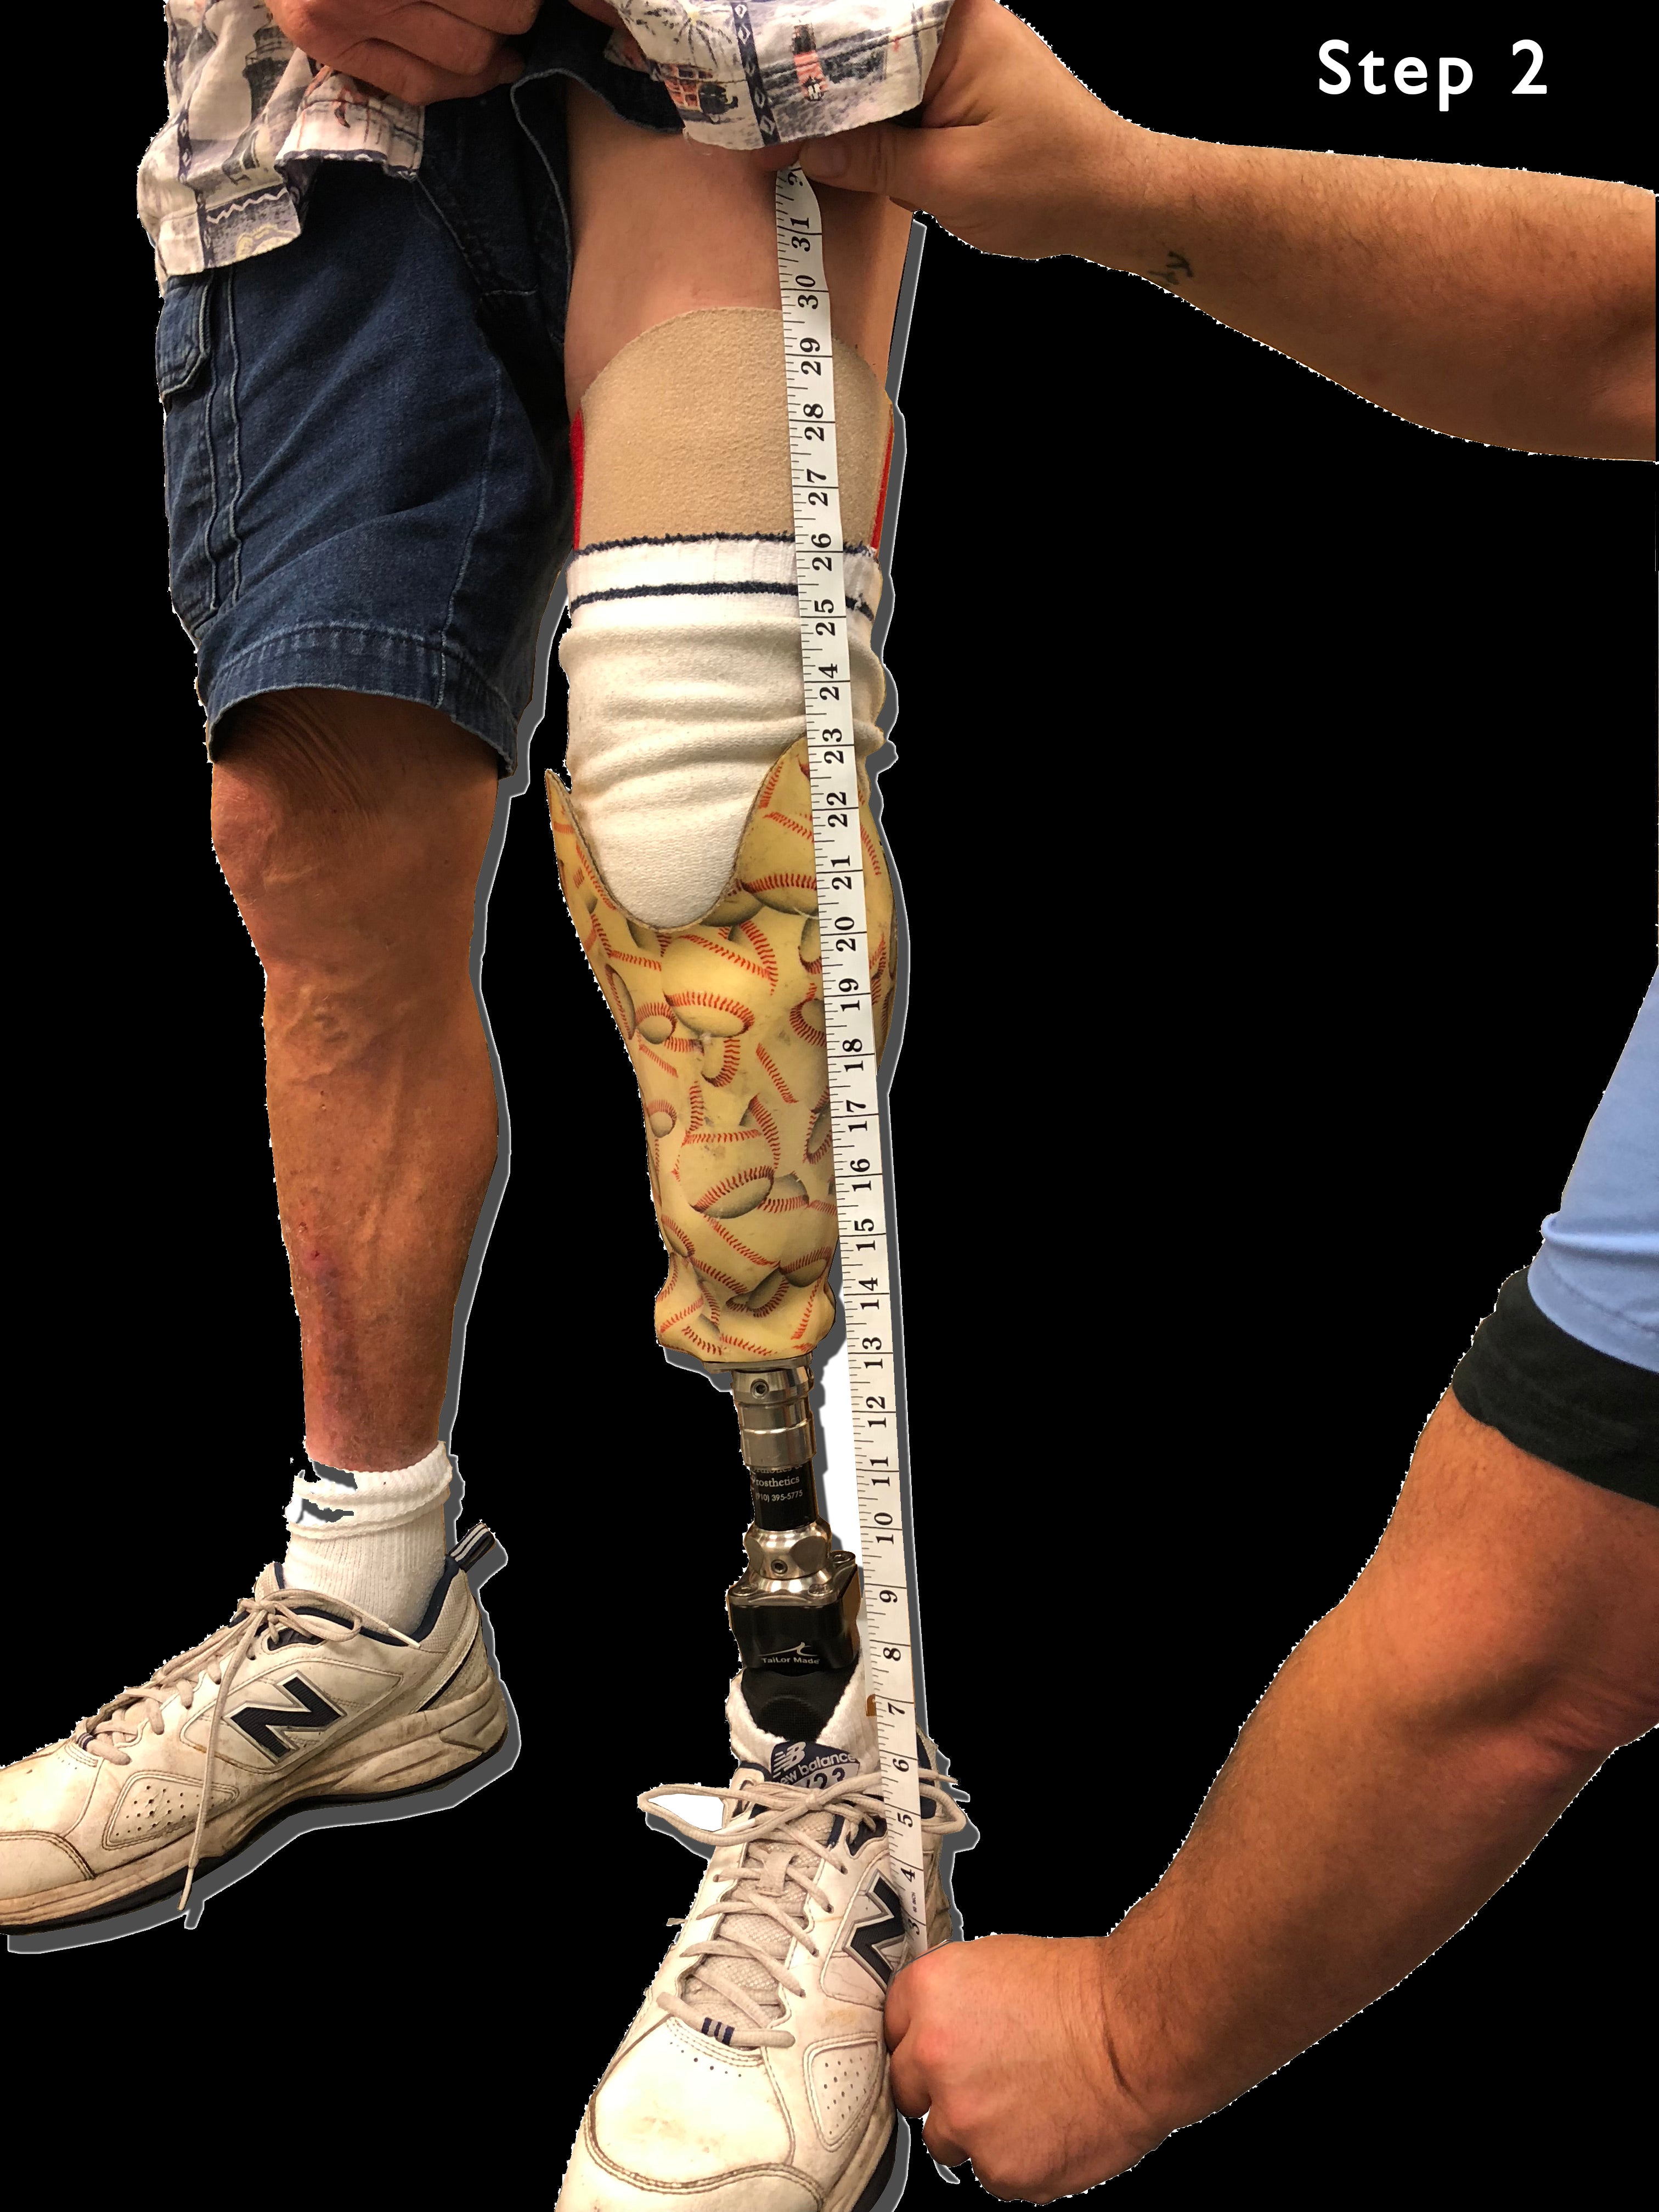 drypro measure length of prosthetic